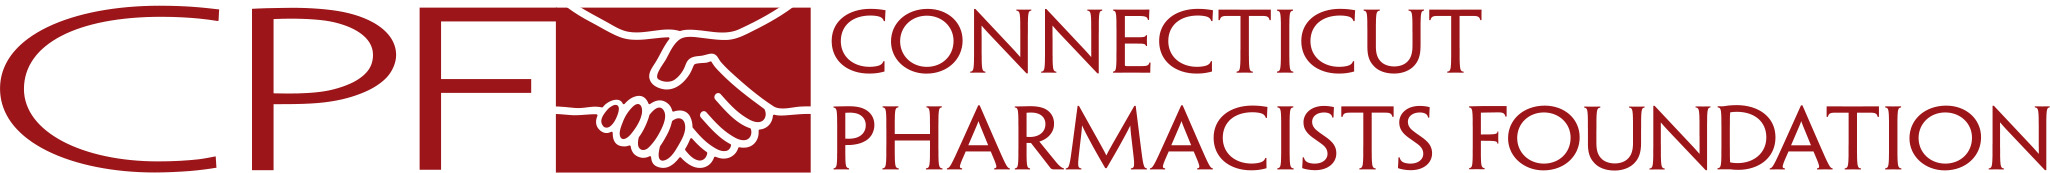 Connecticut Pharmacists Foundation logo